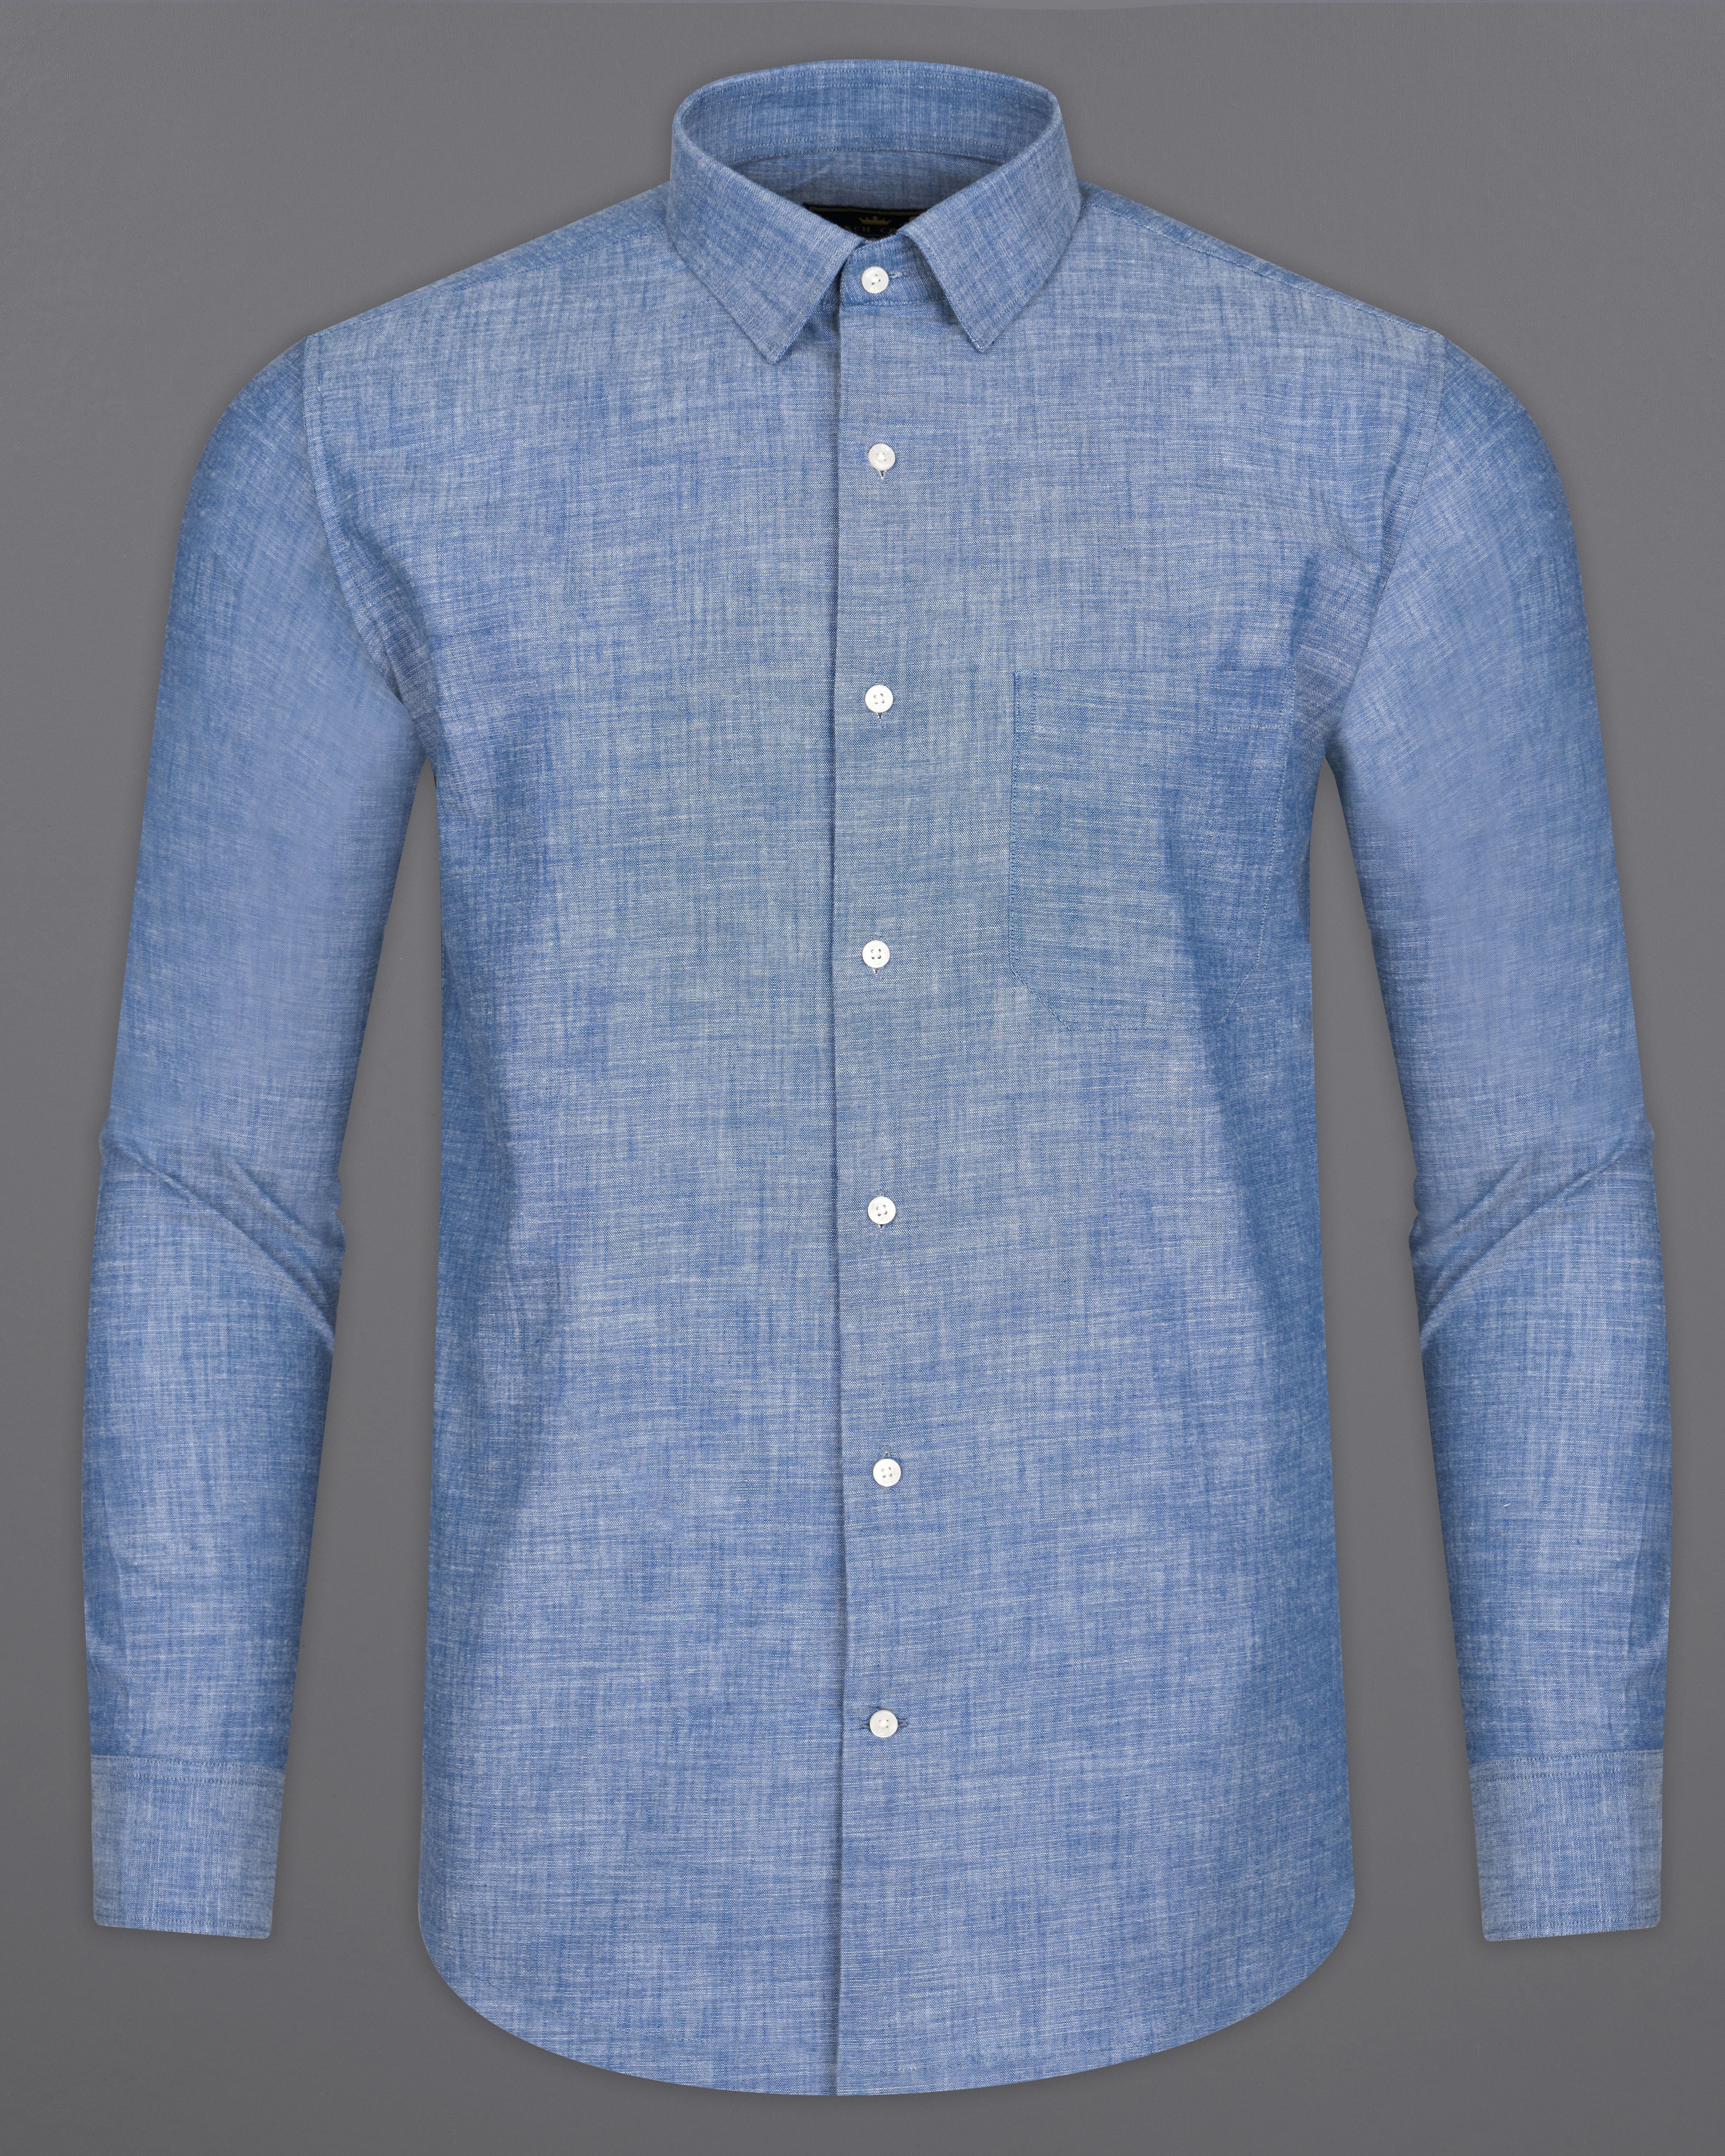 Tealish Blue Royal Oxford Shirt